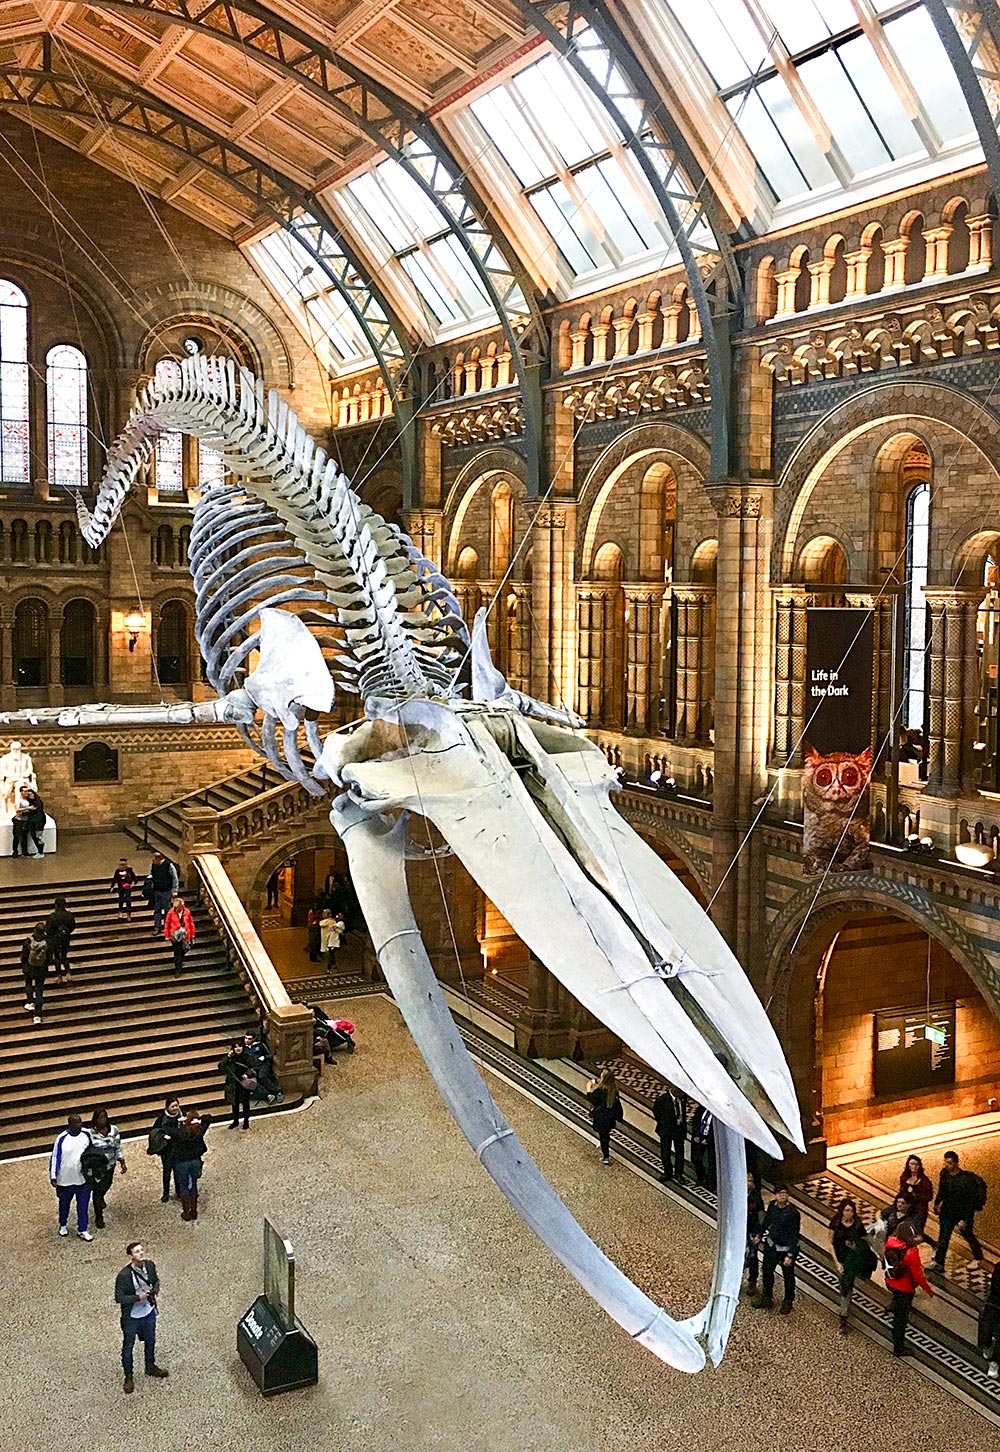 Baleine, Musée d'histoire naturelle, Londres, Angleterre / Whale, Natural History Museum, London, England, UK